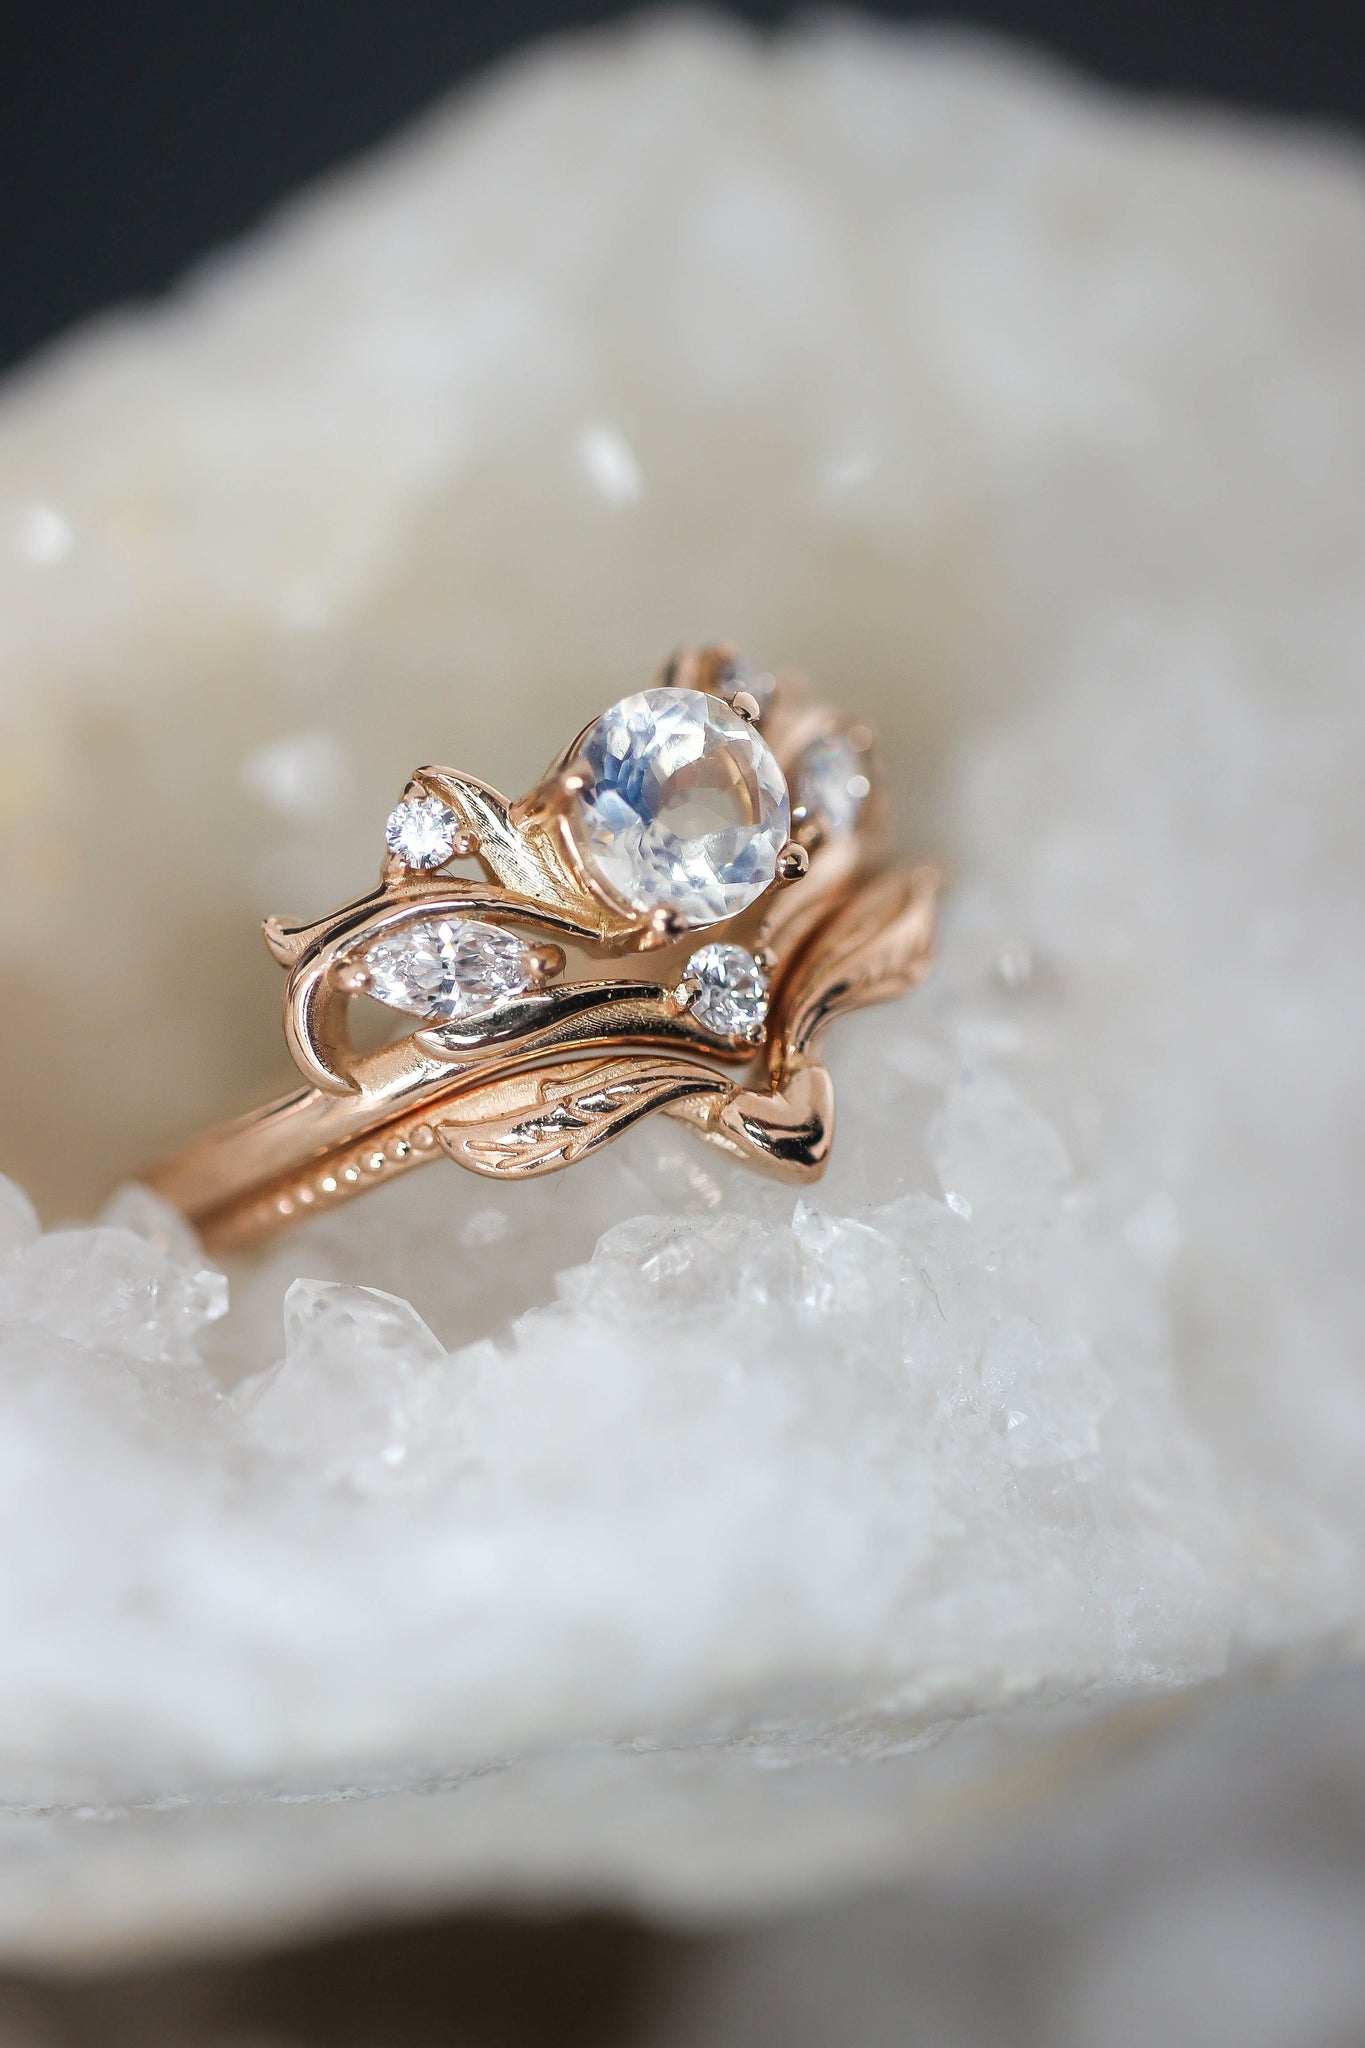 Bridal ring set with rainbow moonstone / Swanlake - Eden Garden Jewelry™